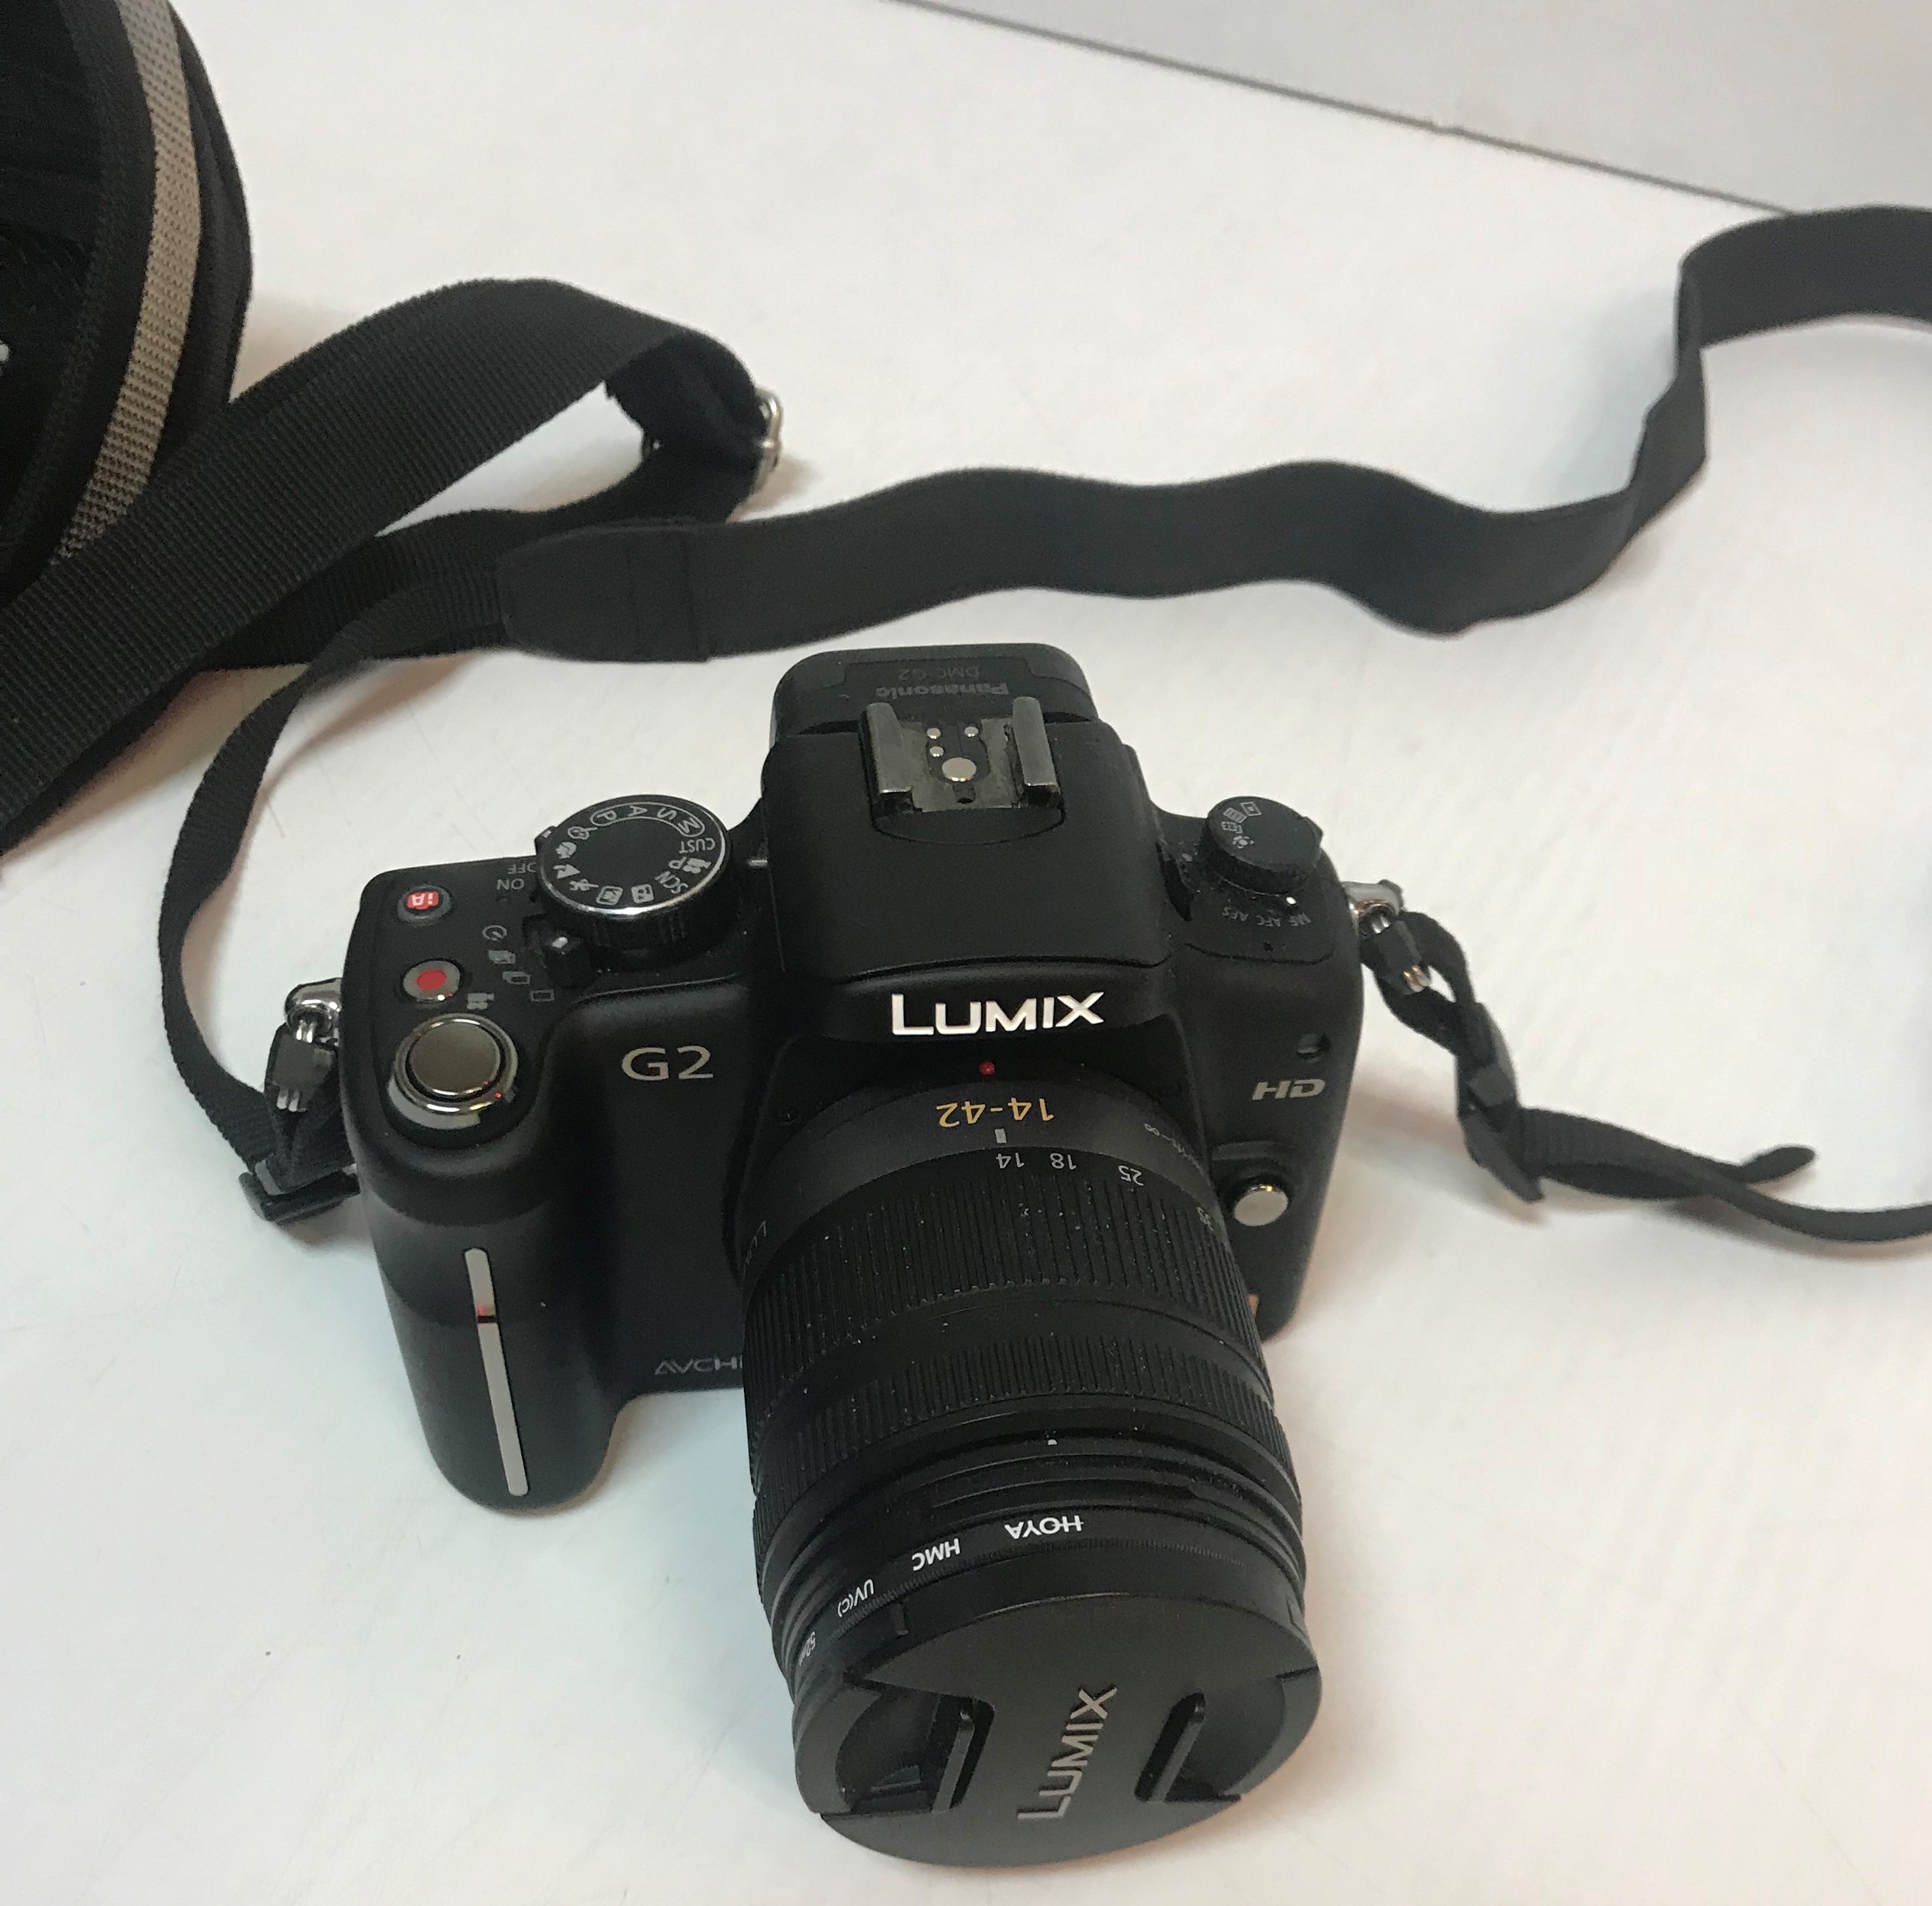 A Panasonic Lumix DMC-G2 camera with a 14-42 lens, instructions, - Image 2 of 3